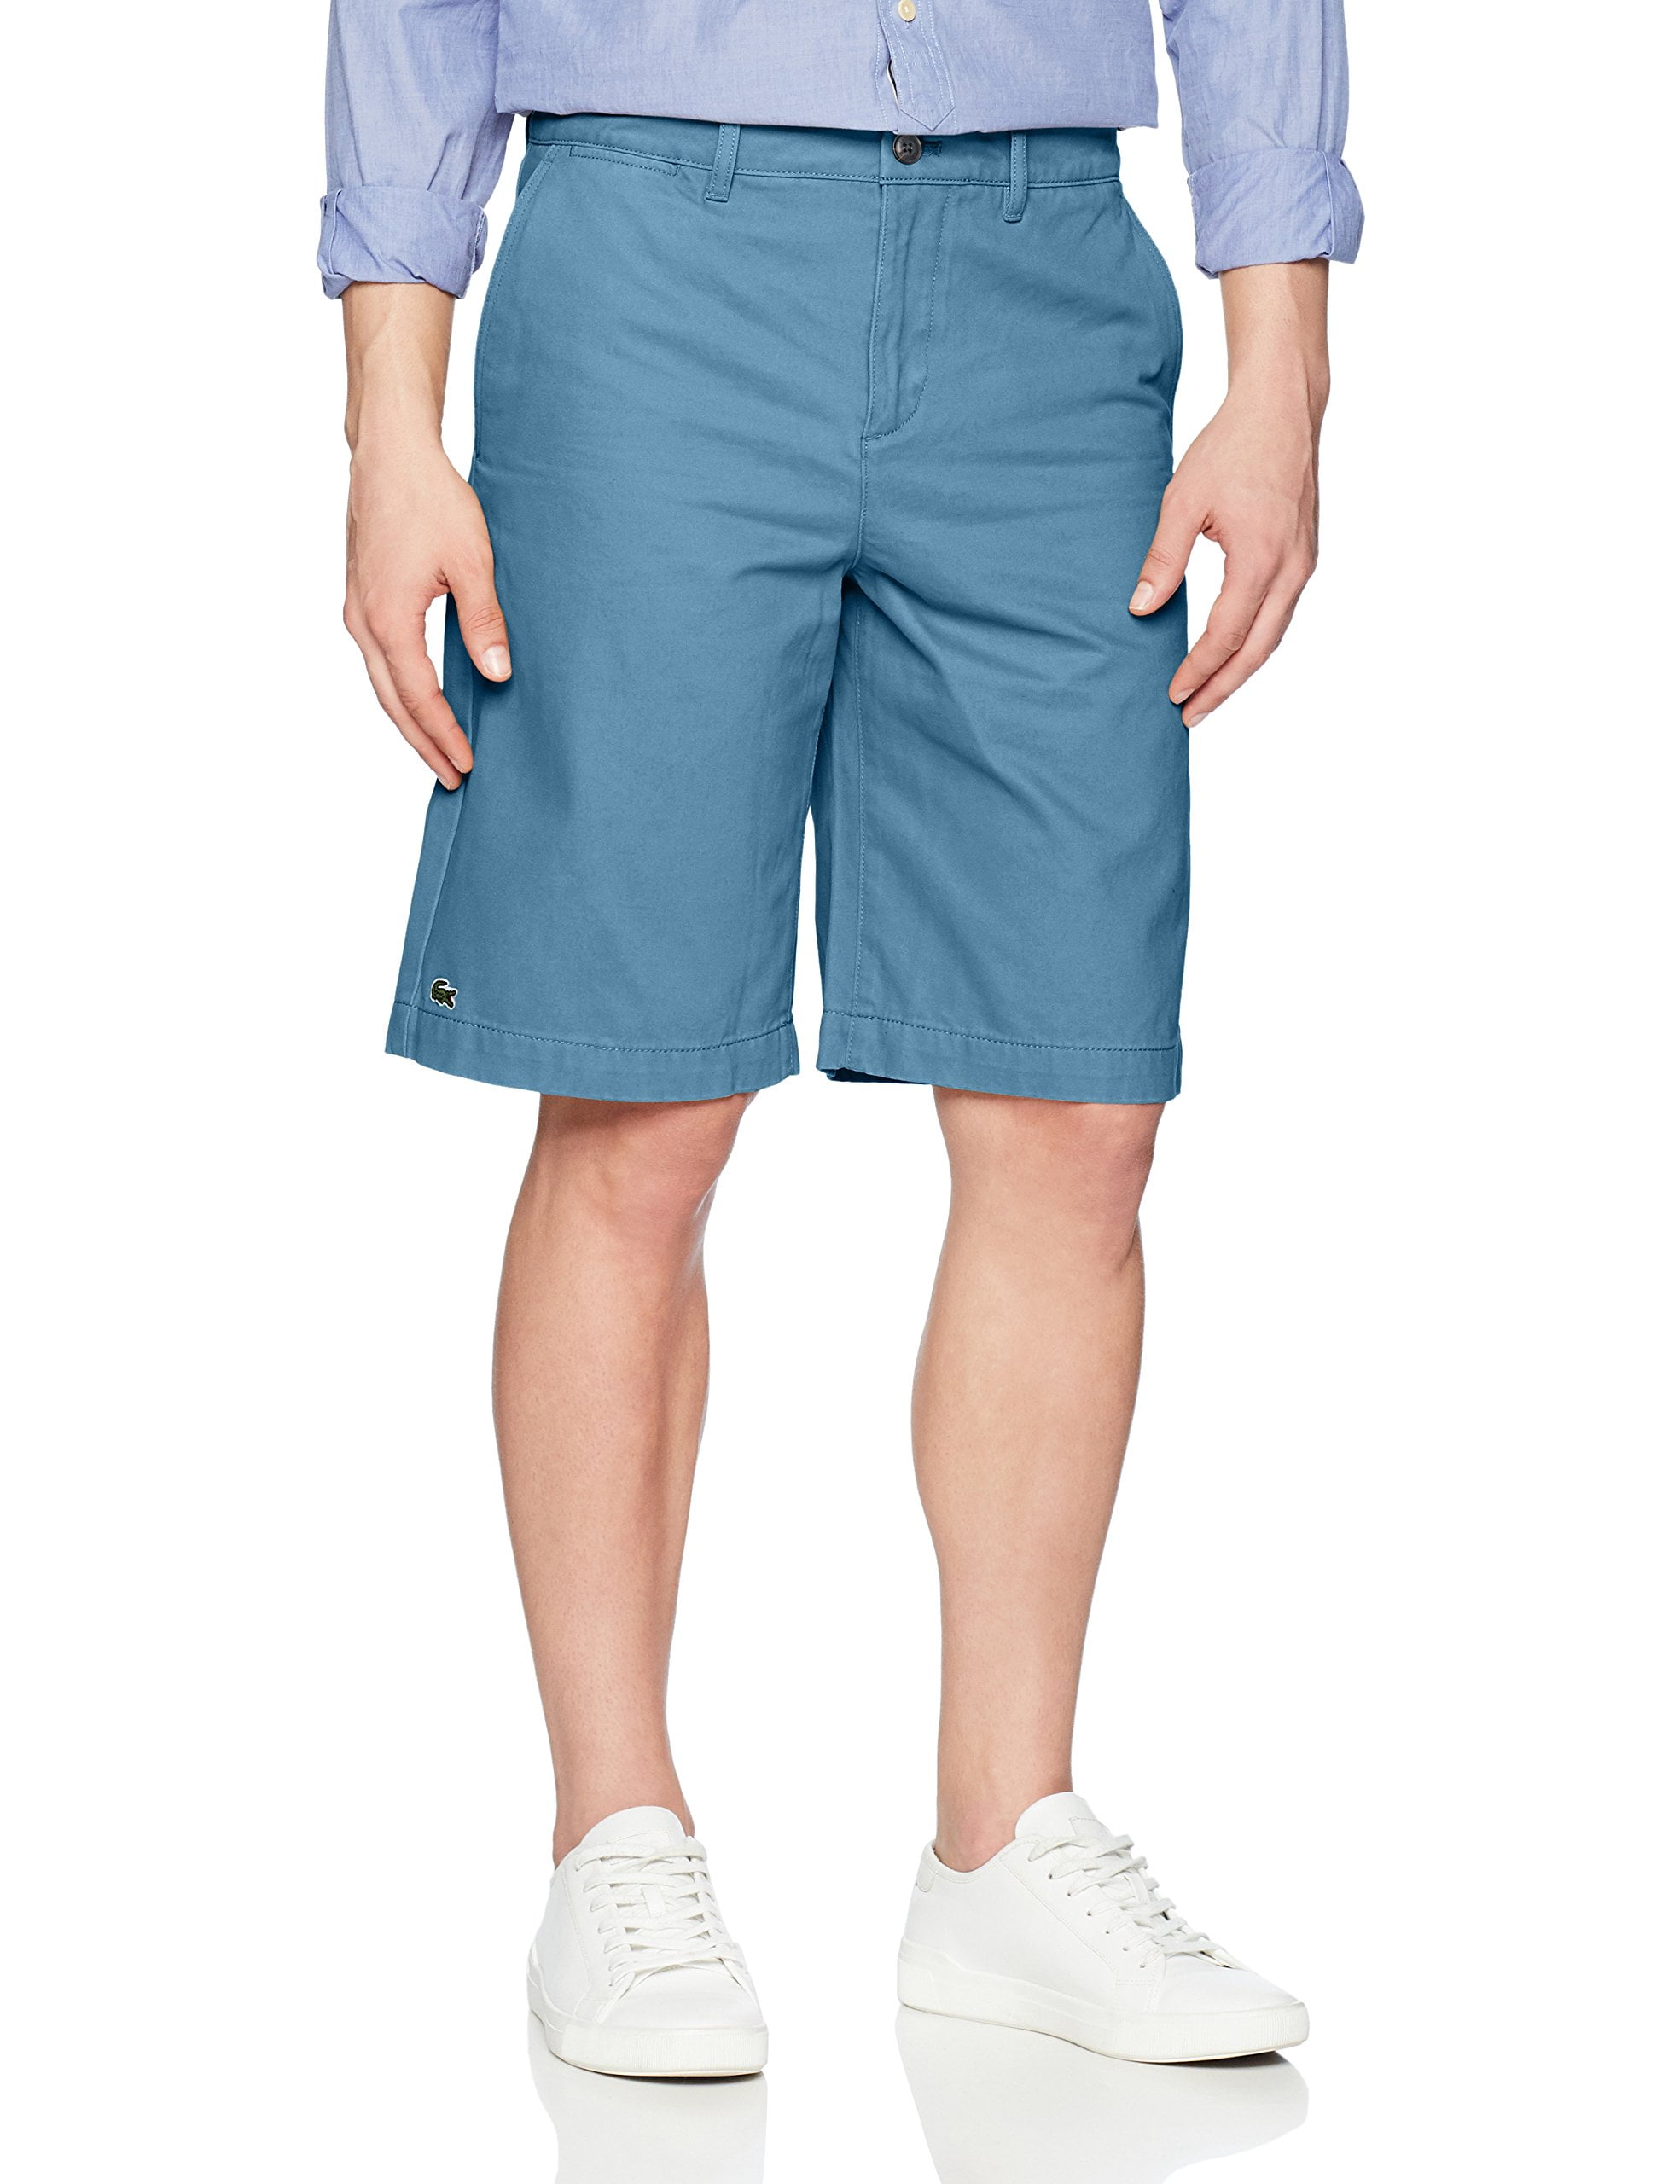 Lacoste Shorts - Mens Bermuda Regular-Fit Shorts Button-Front 30 ...